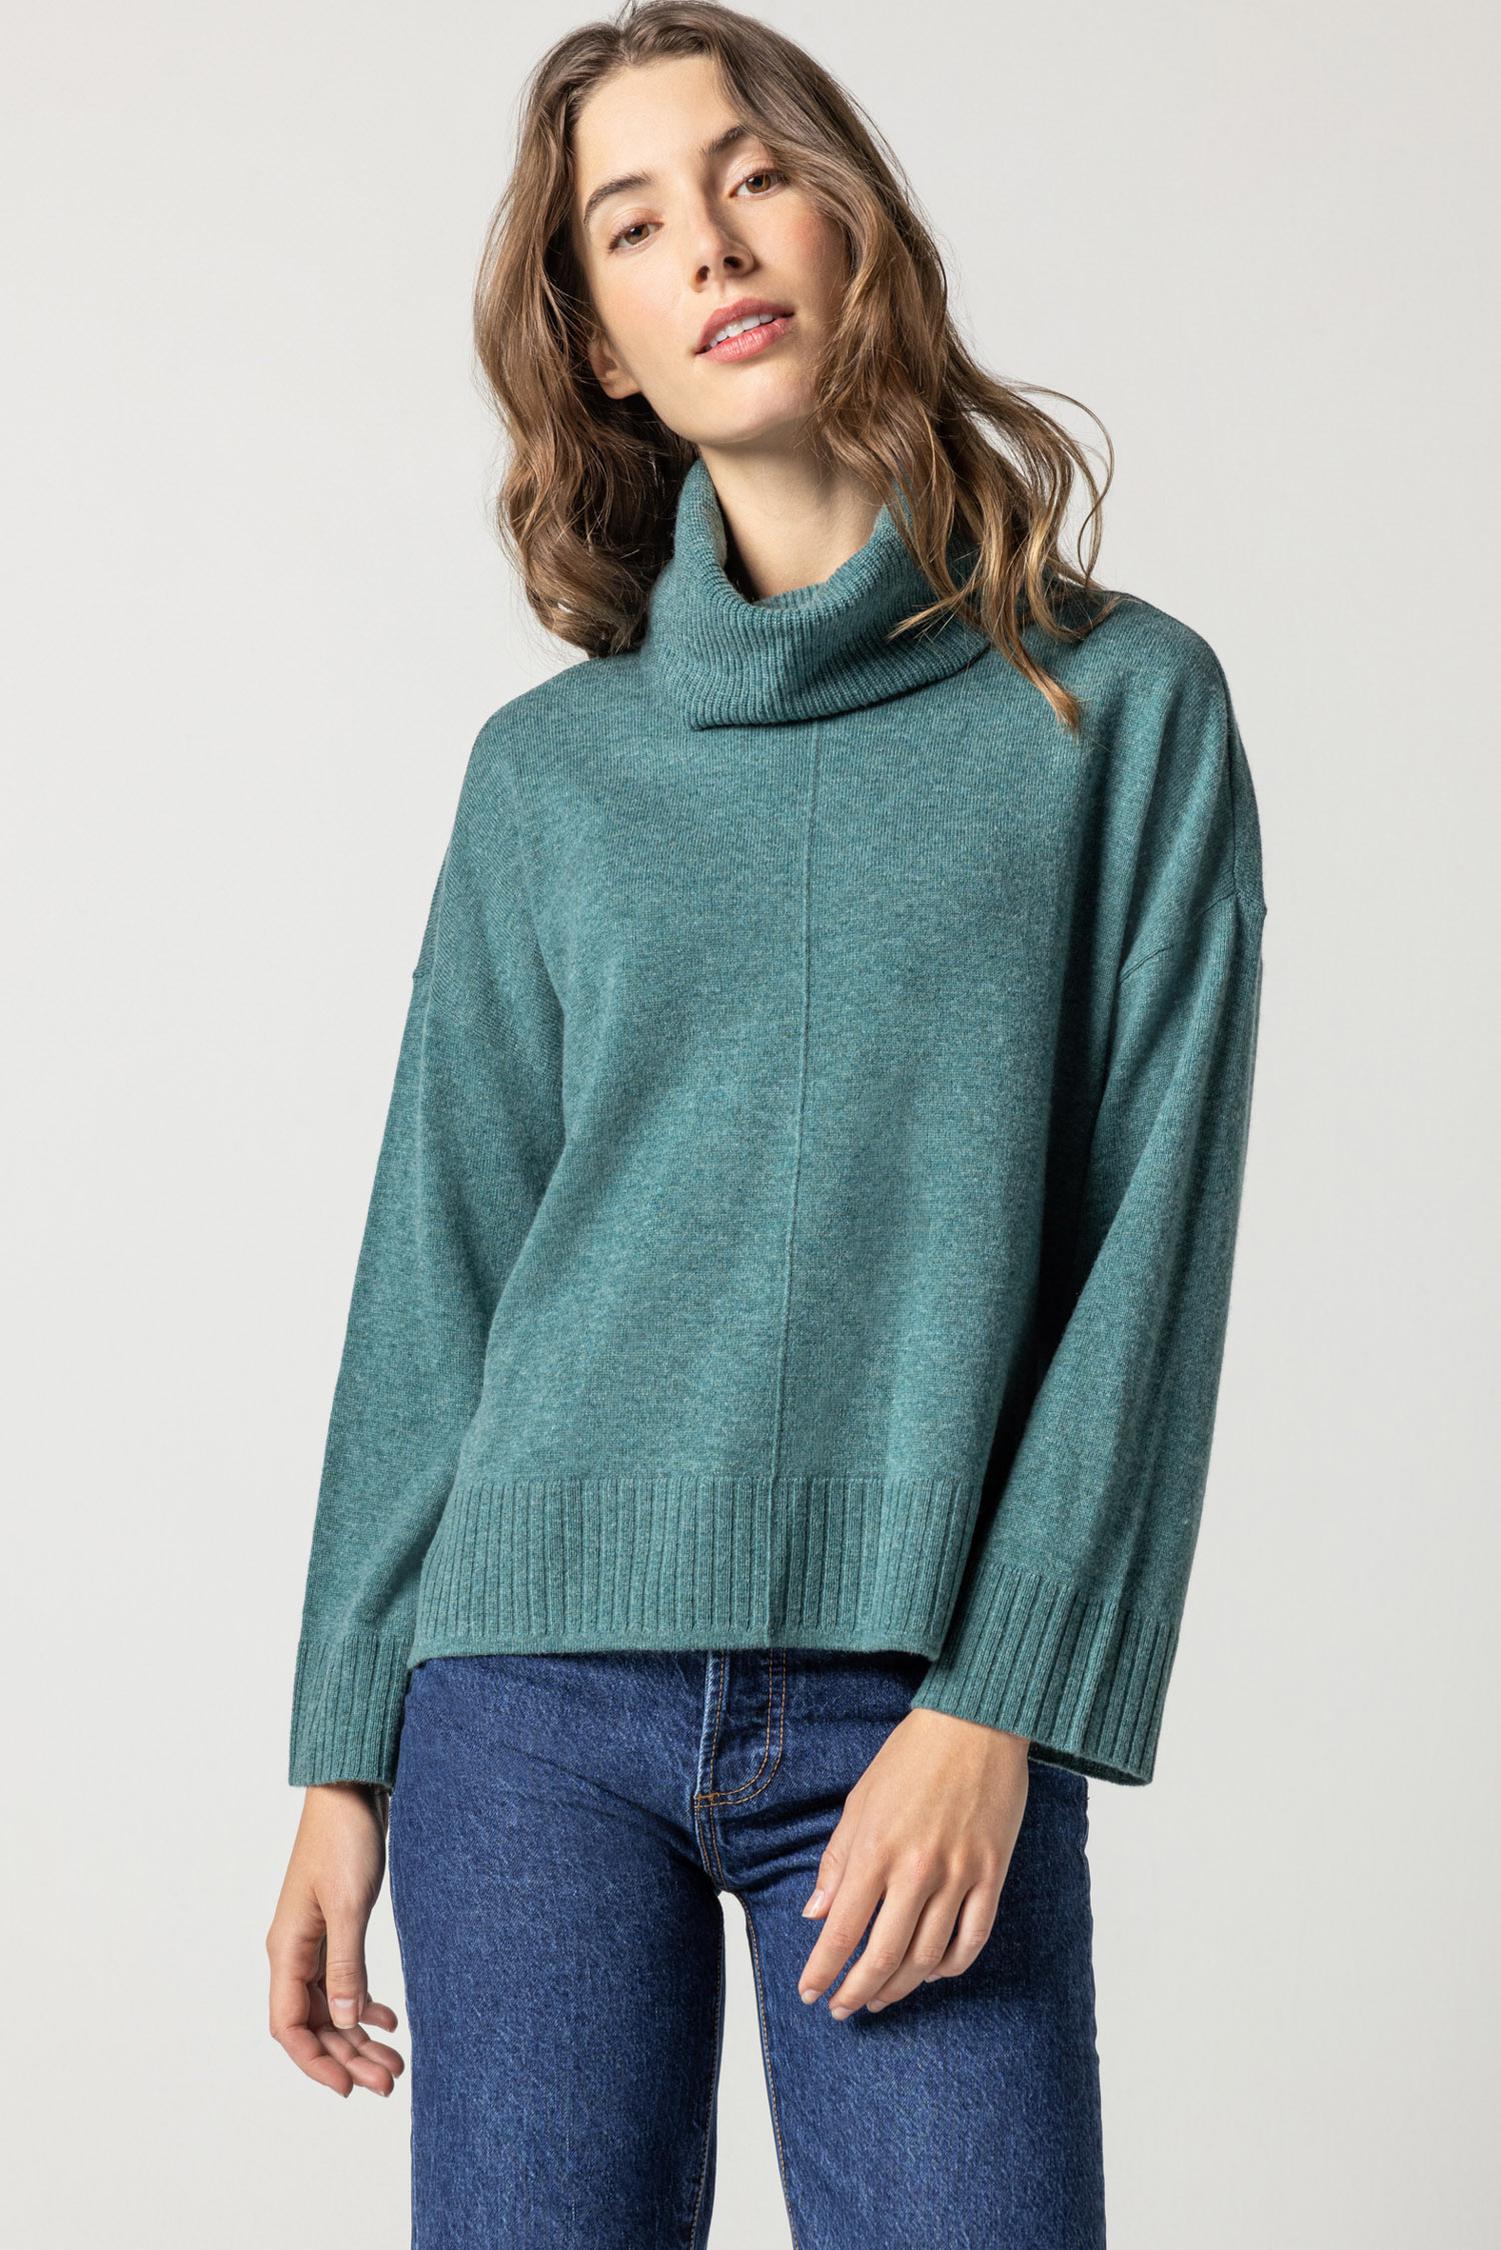 Sideslit Turtleneck Sweater